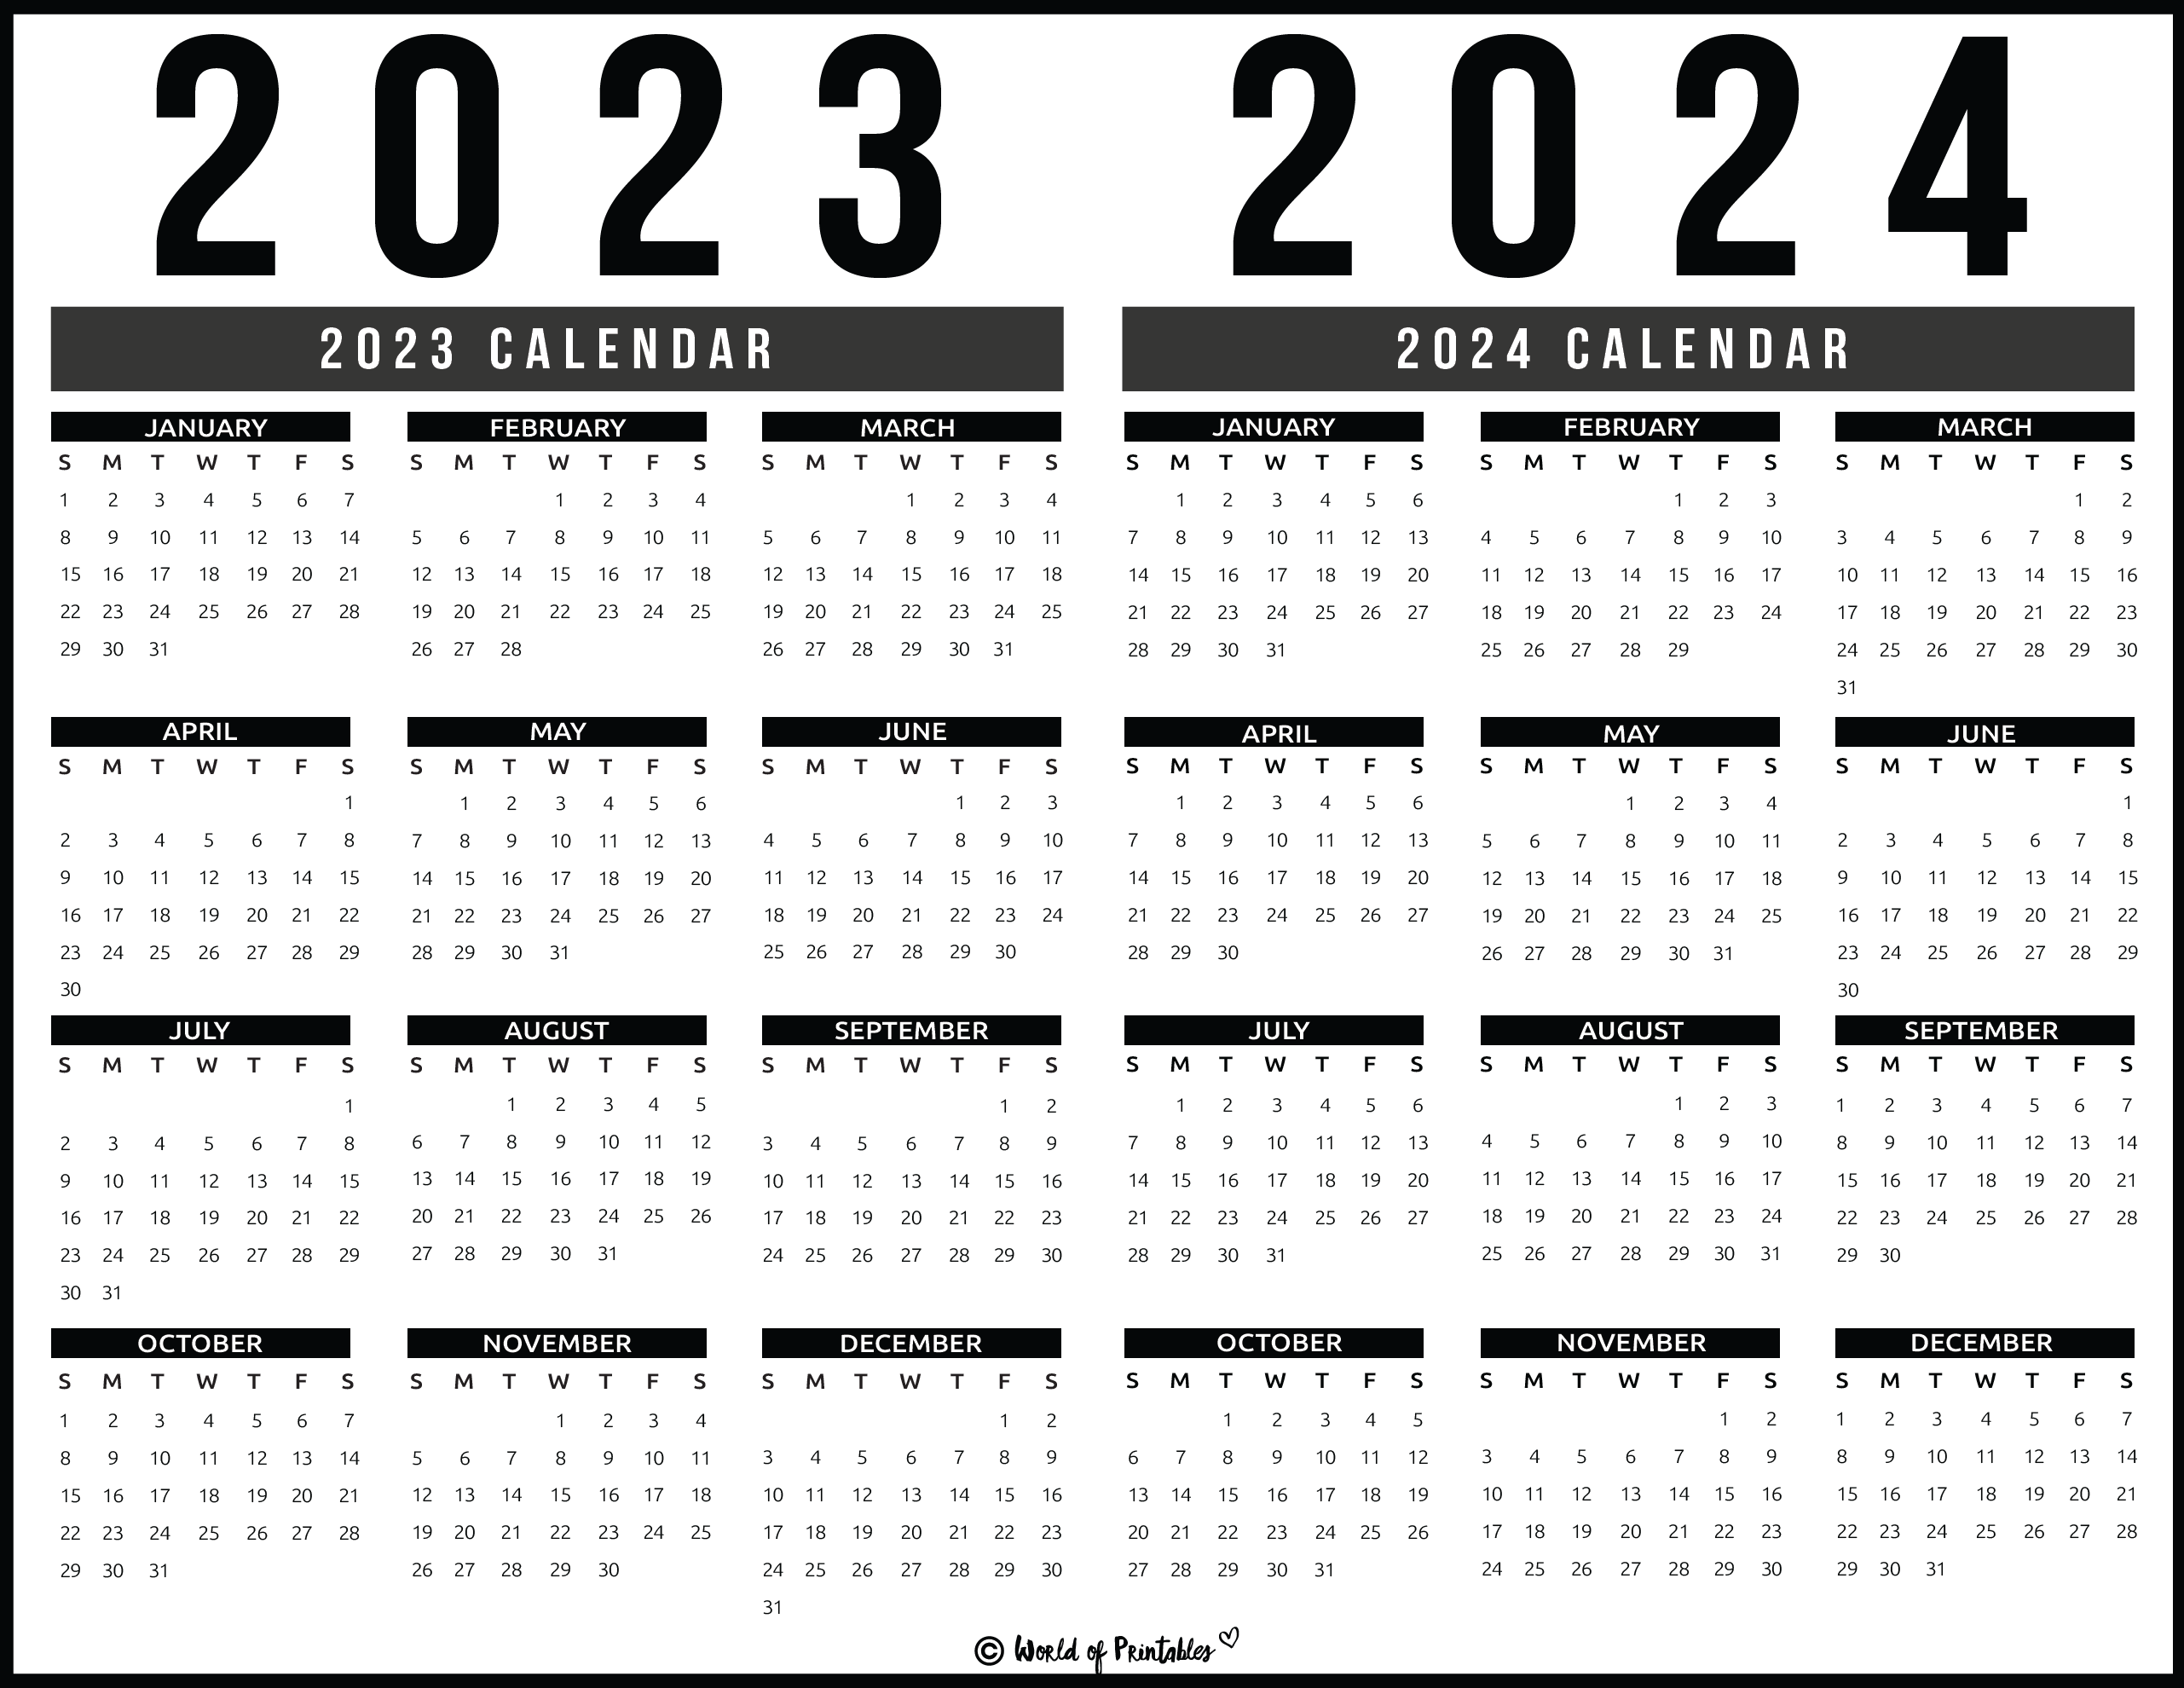 2023 2024 Calendar Free Printables - World Of Printables for Printable Monthly Calendar 2023 And 2024